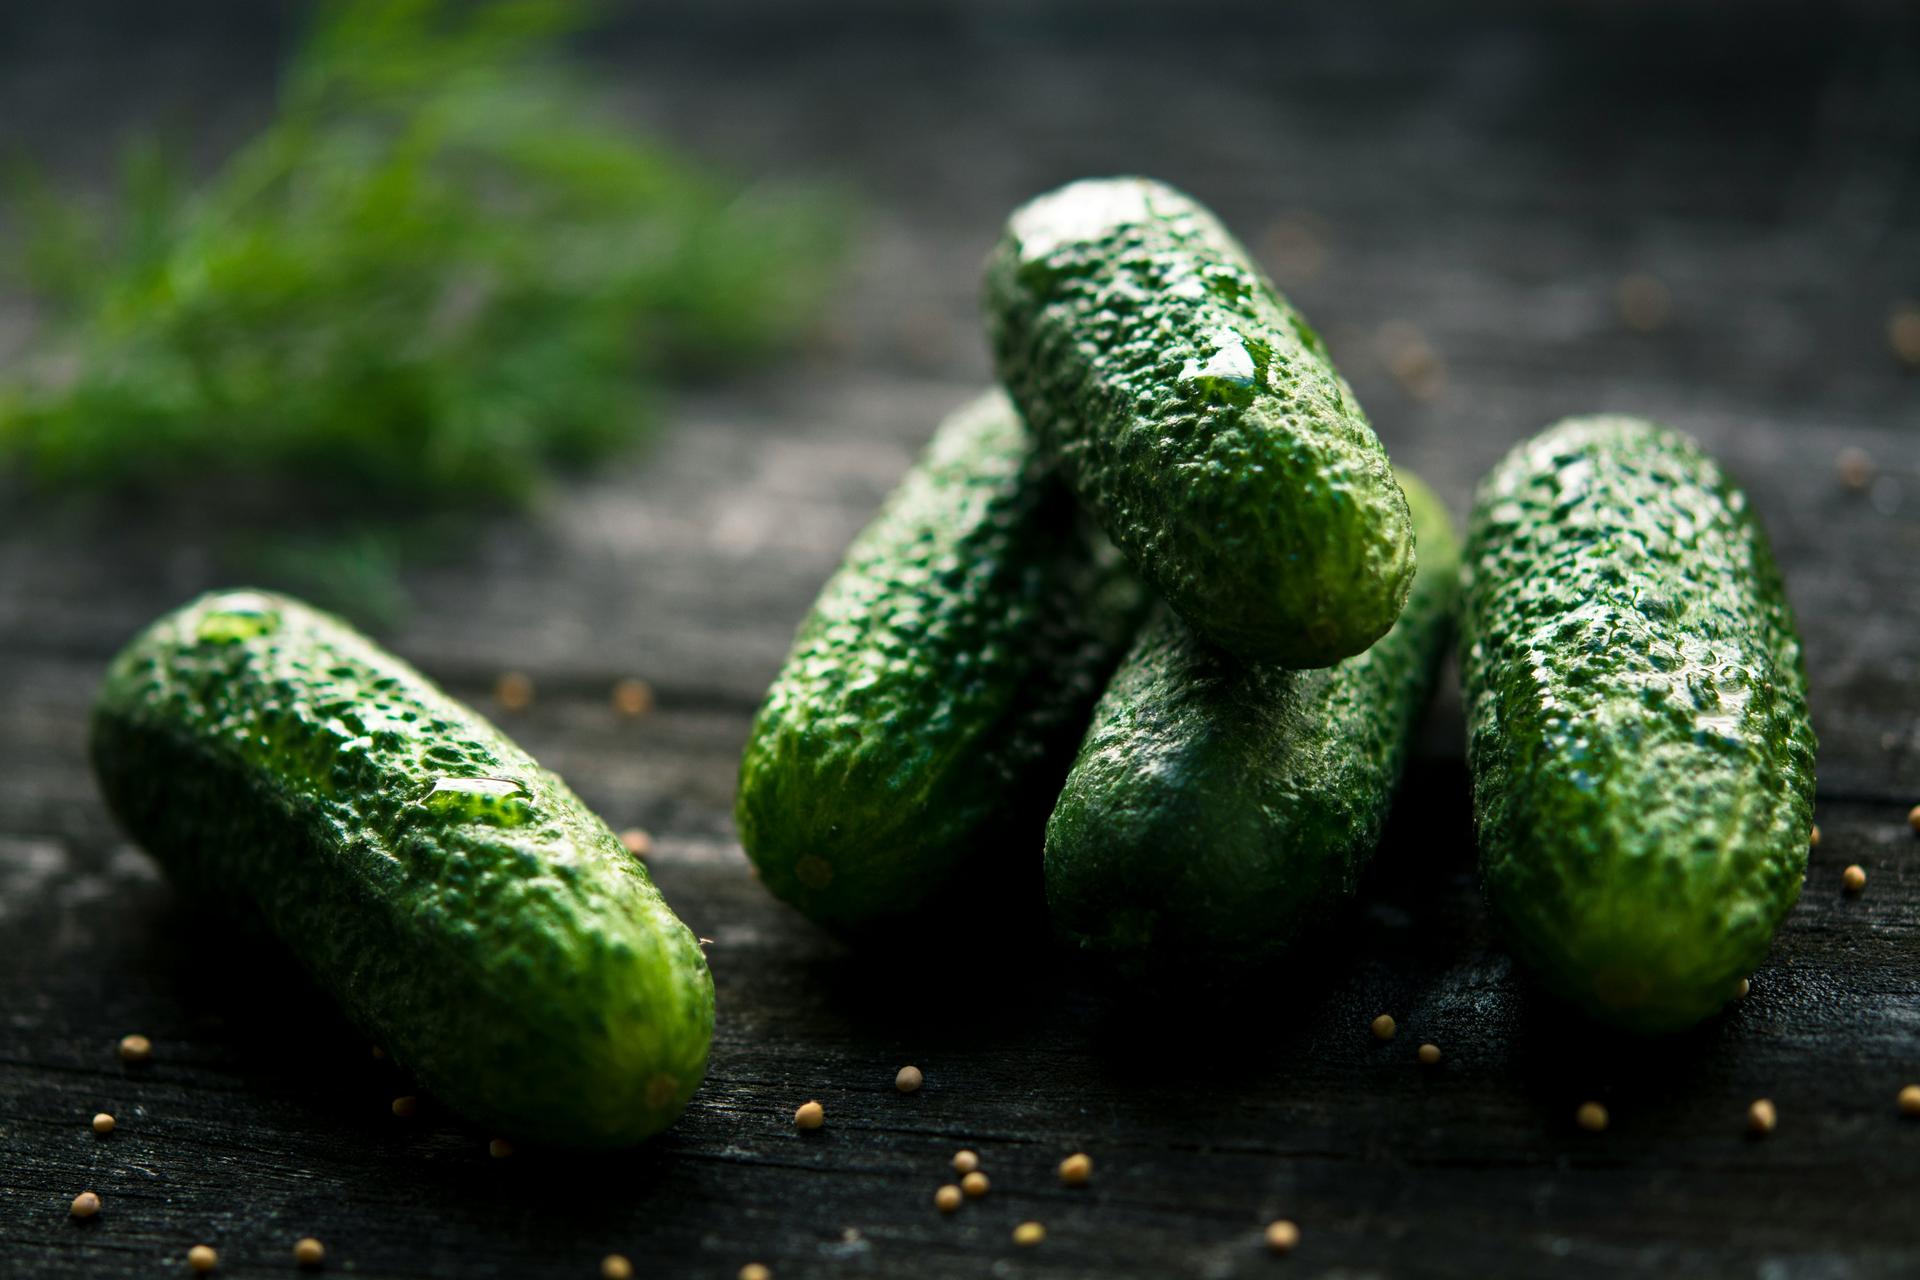 Green Cucumbers